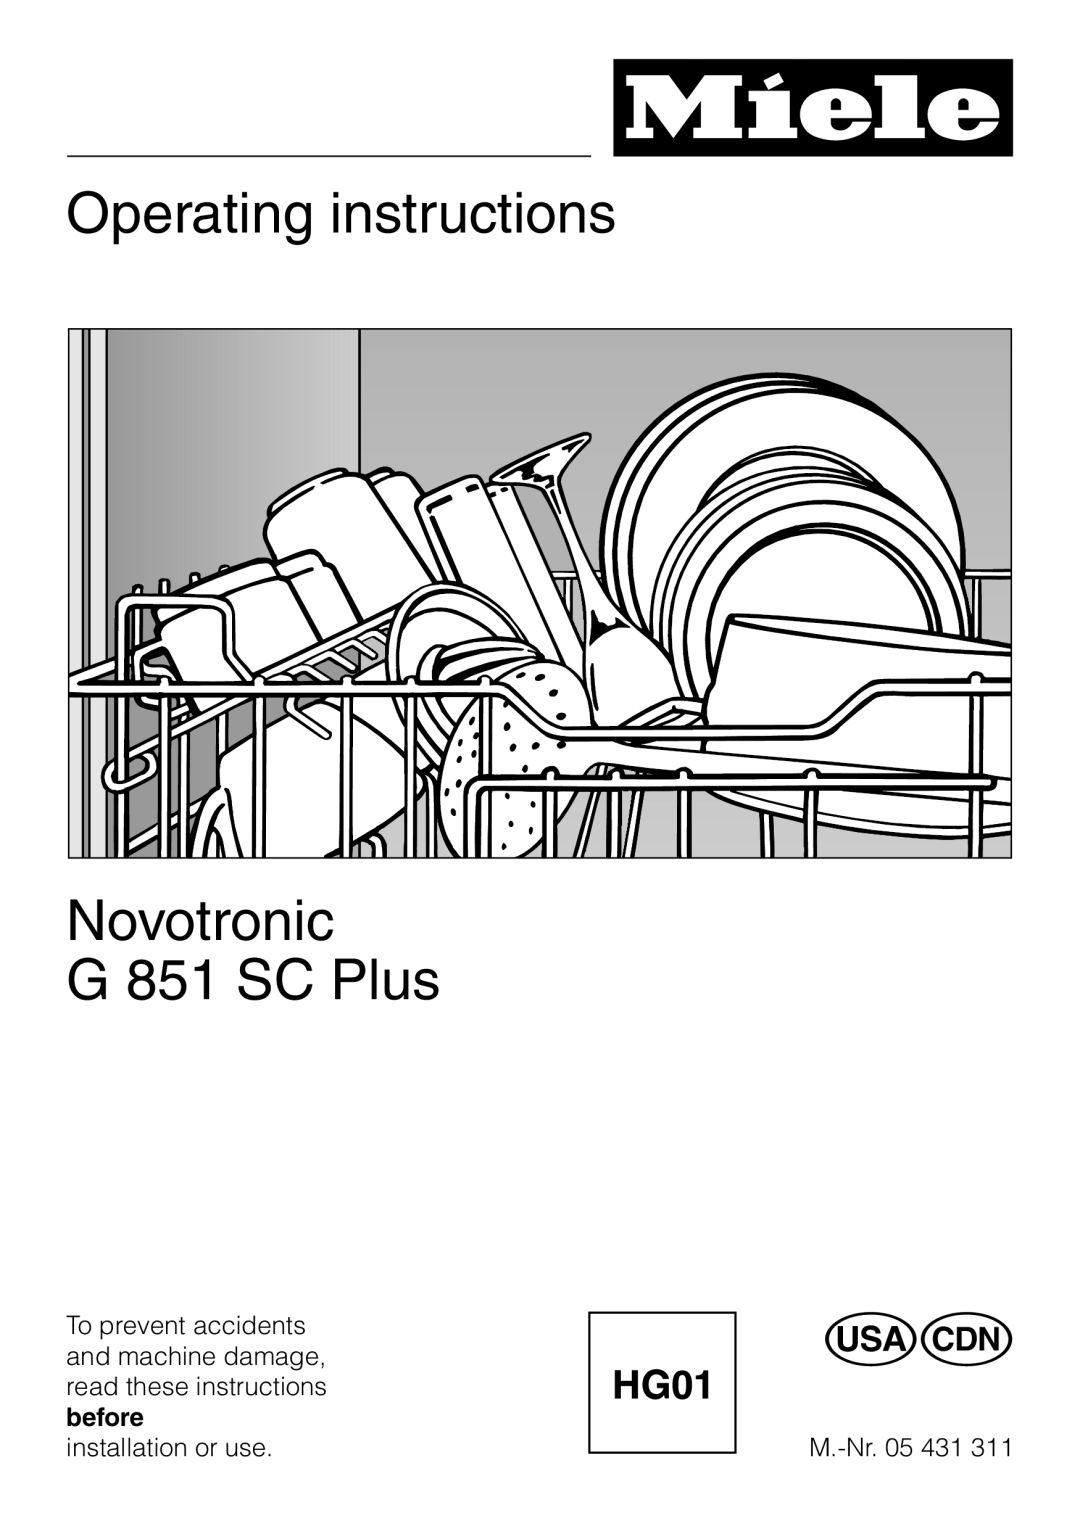 Miele operating instructions Operating instructions Novotronic G 851 SC Plus 